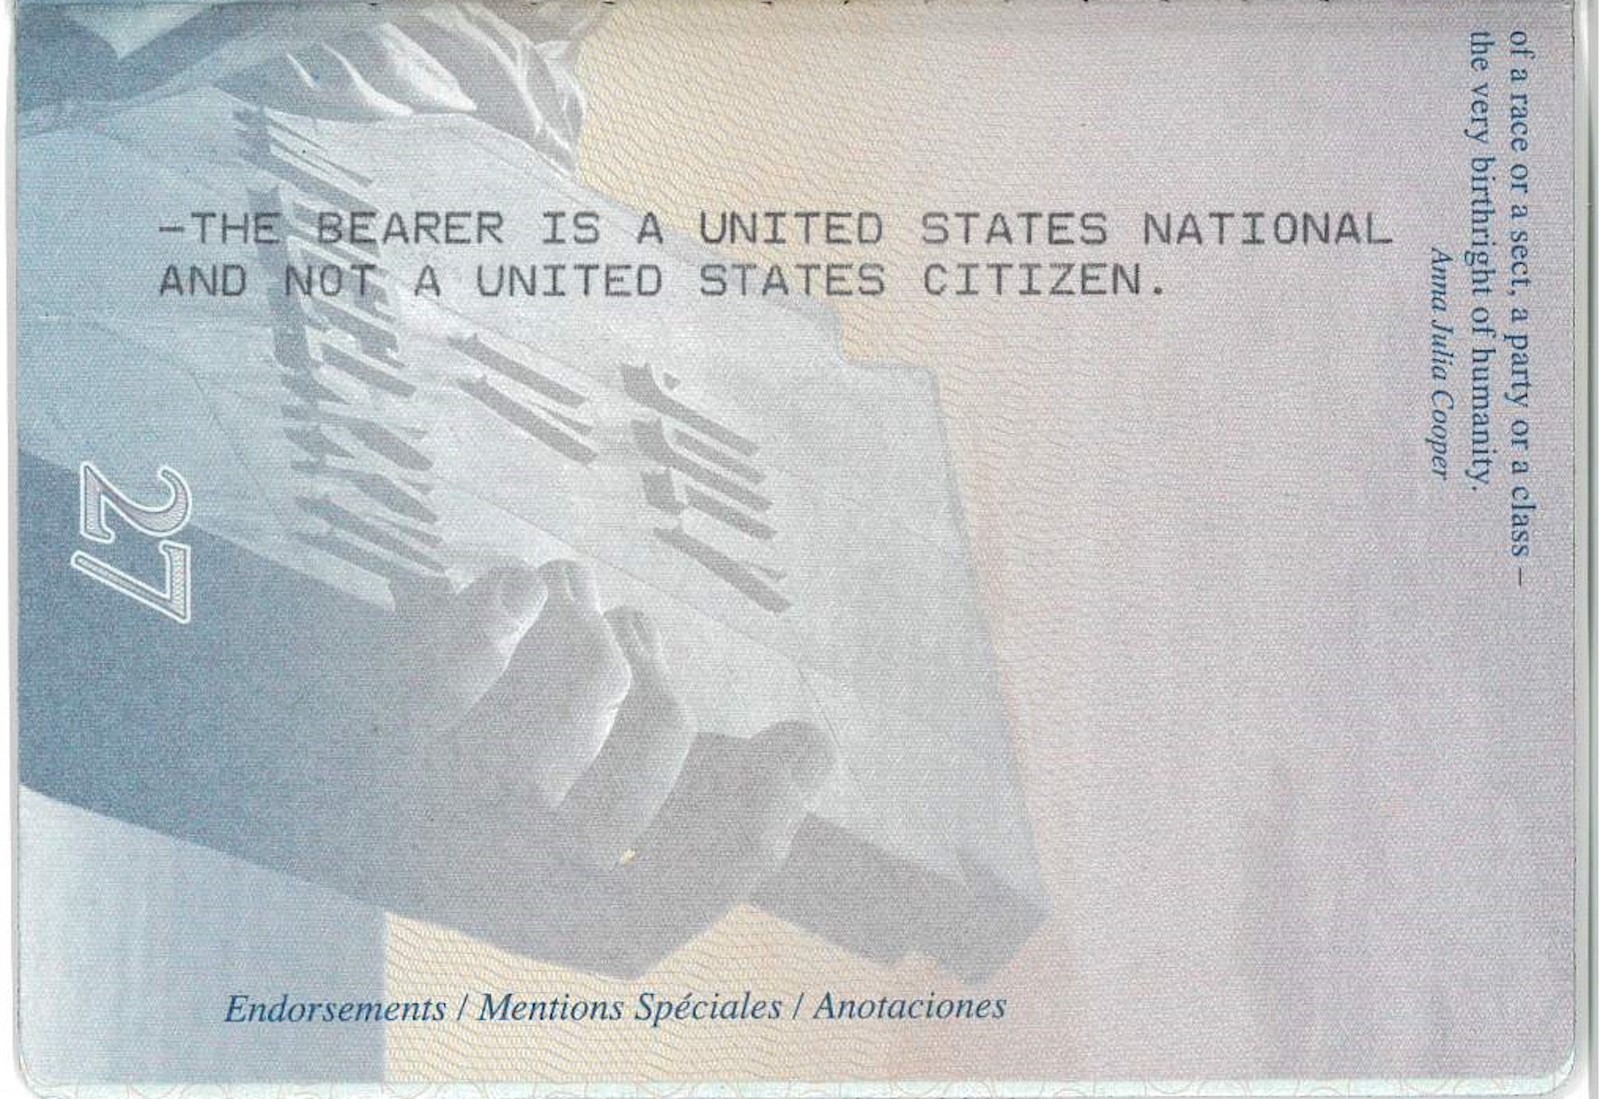 Message inside US national passport - American Samoa